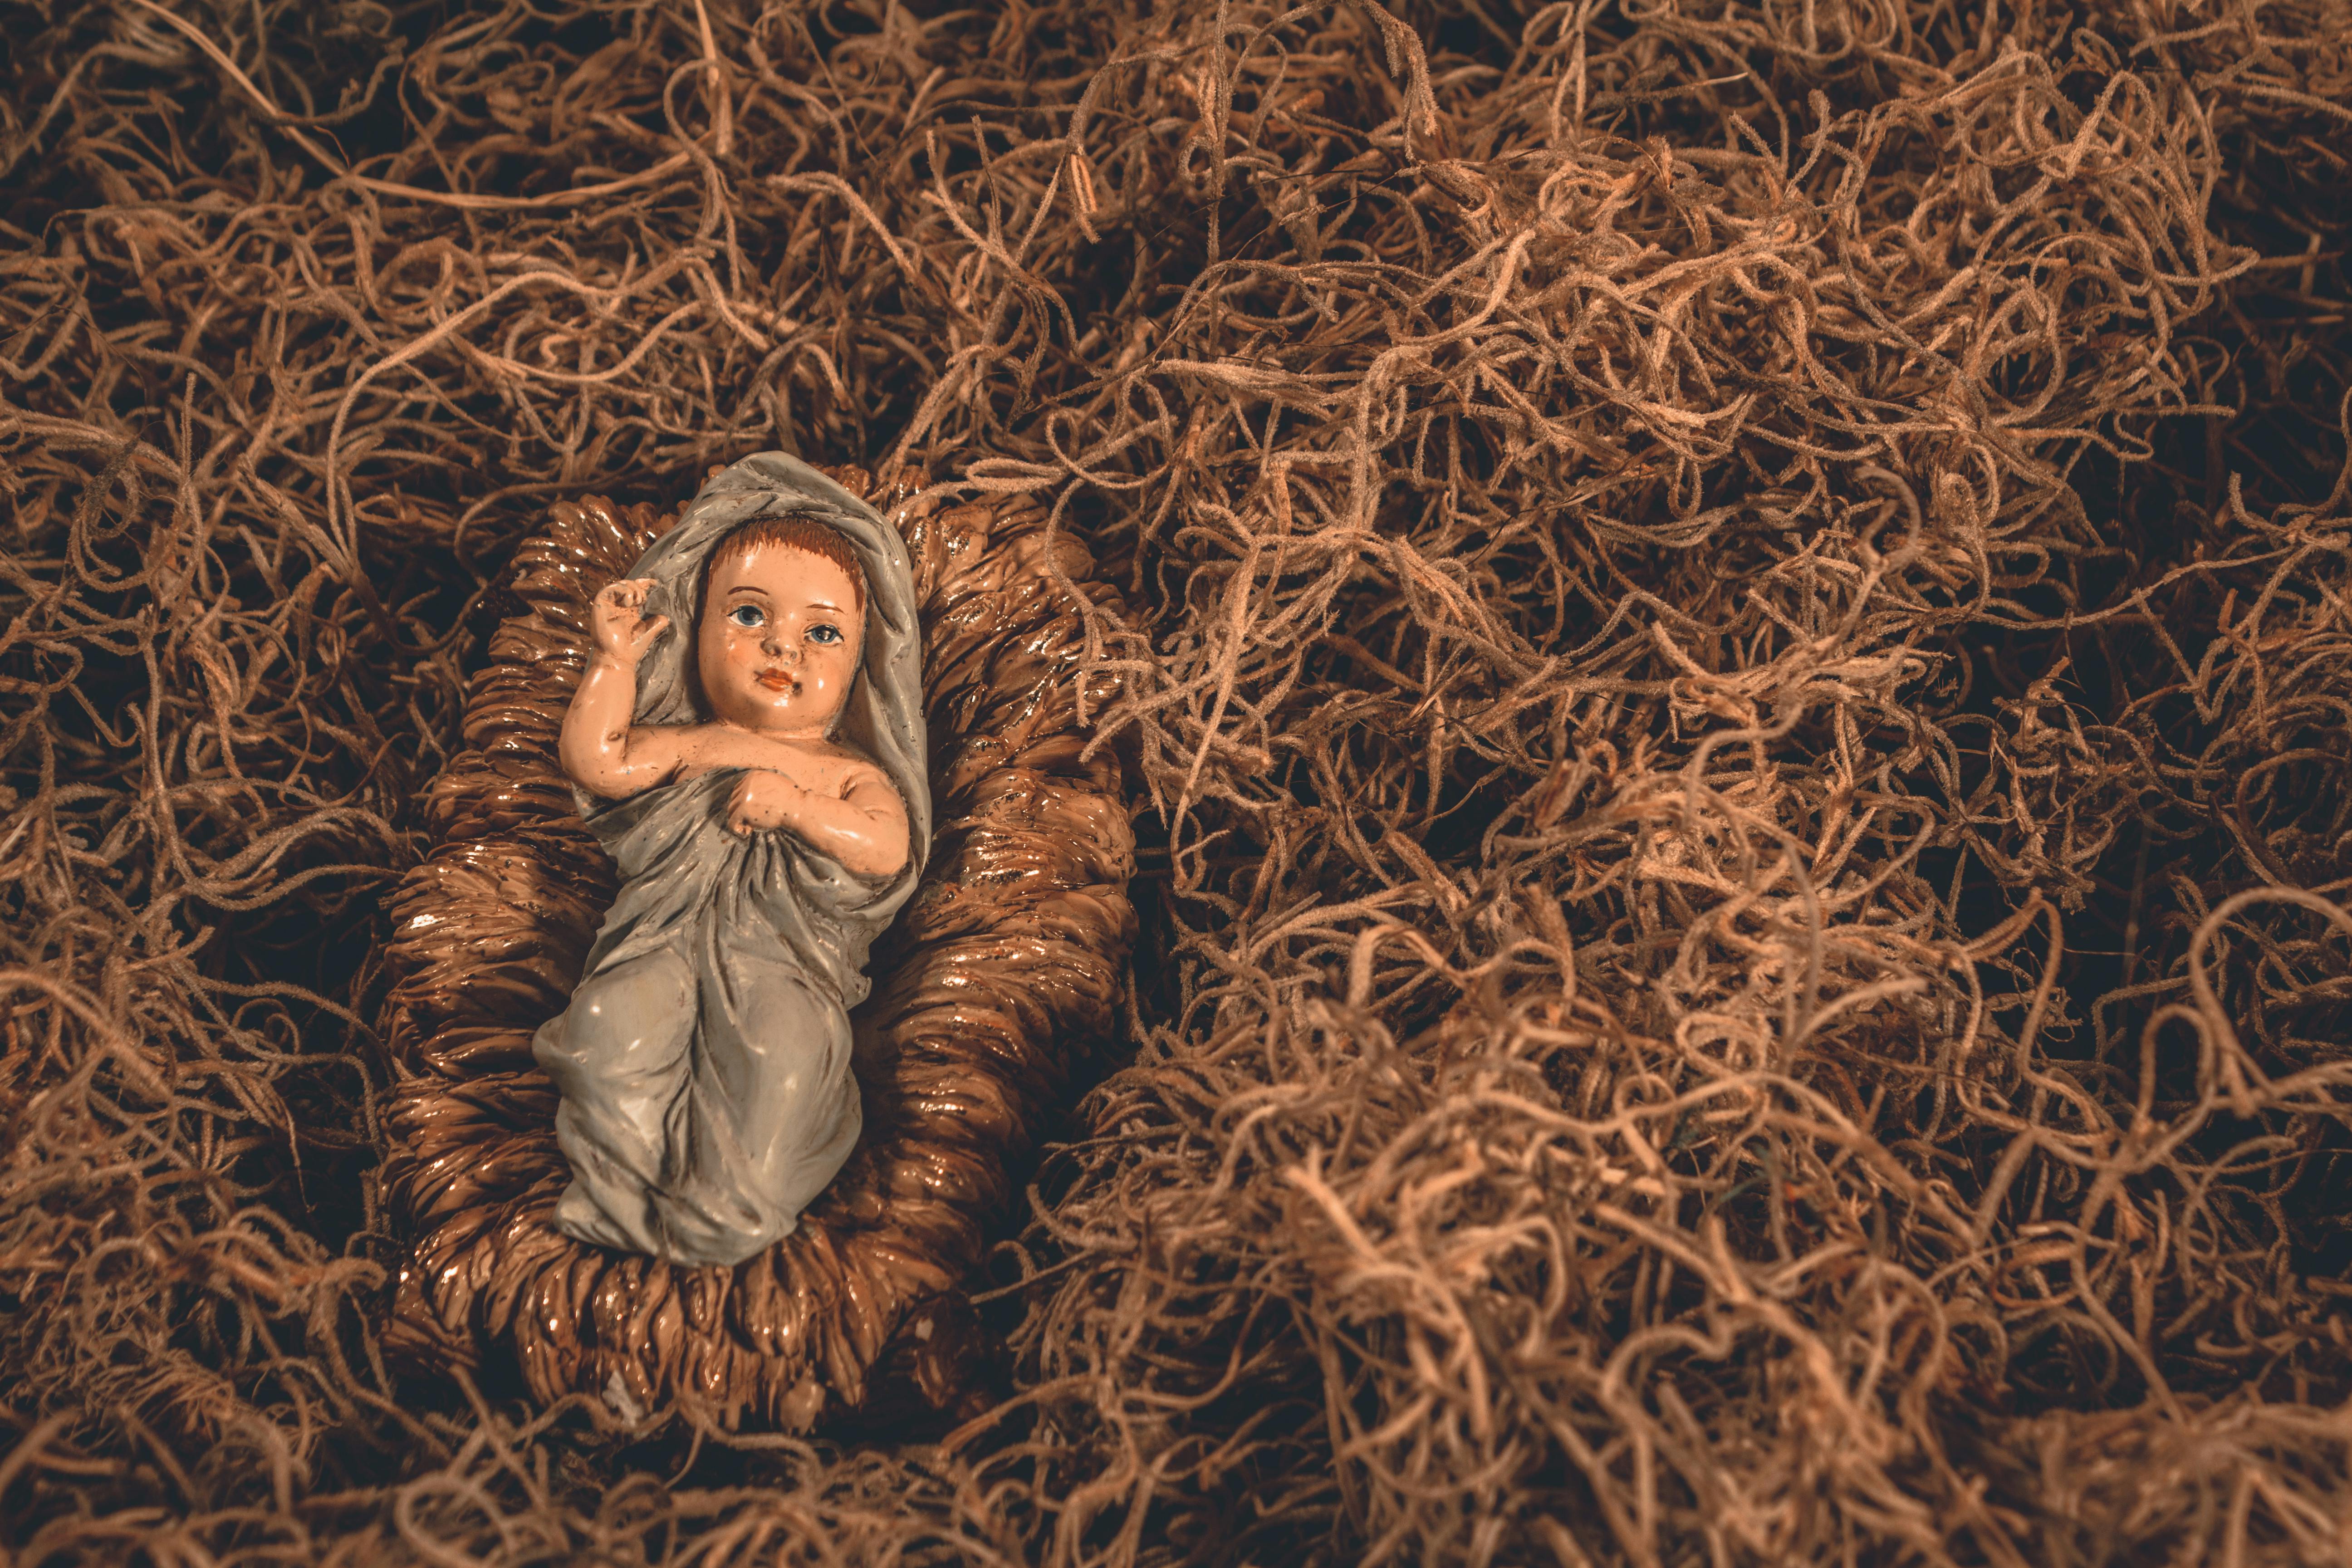 🔥 Jesus And Cute Baby Children Wallpaper HD | MyGodImages